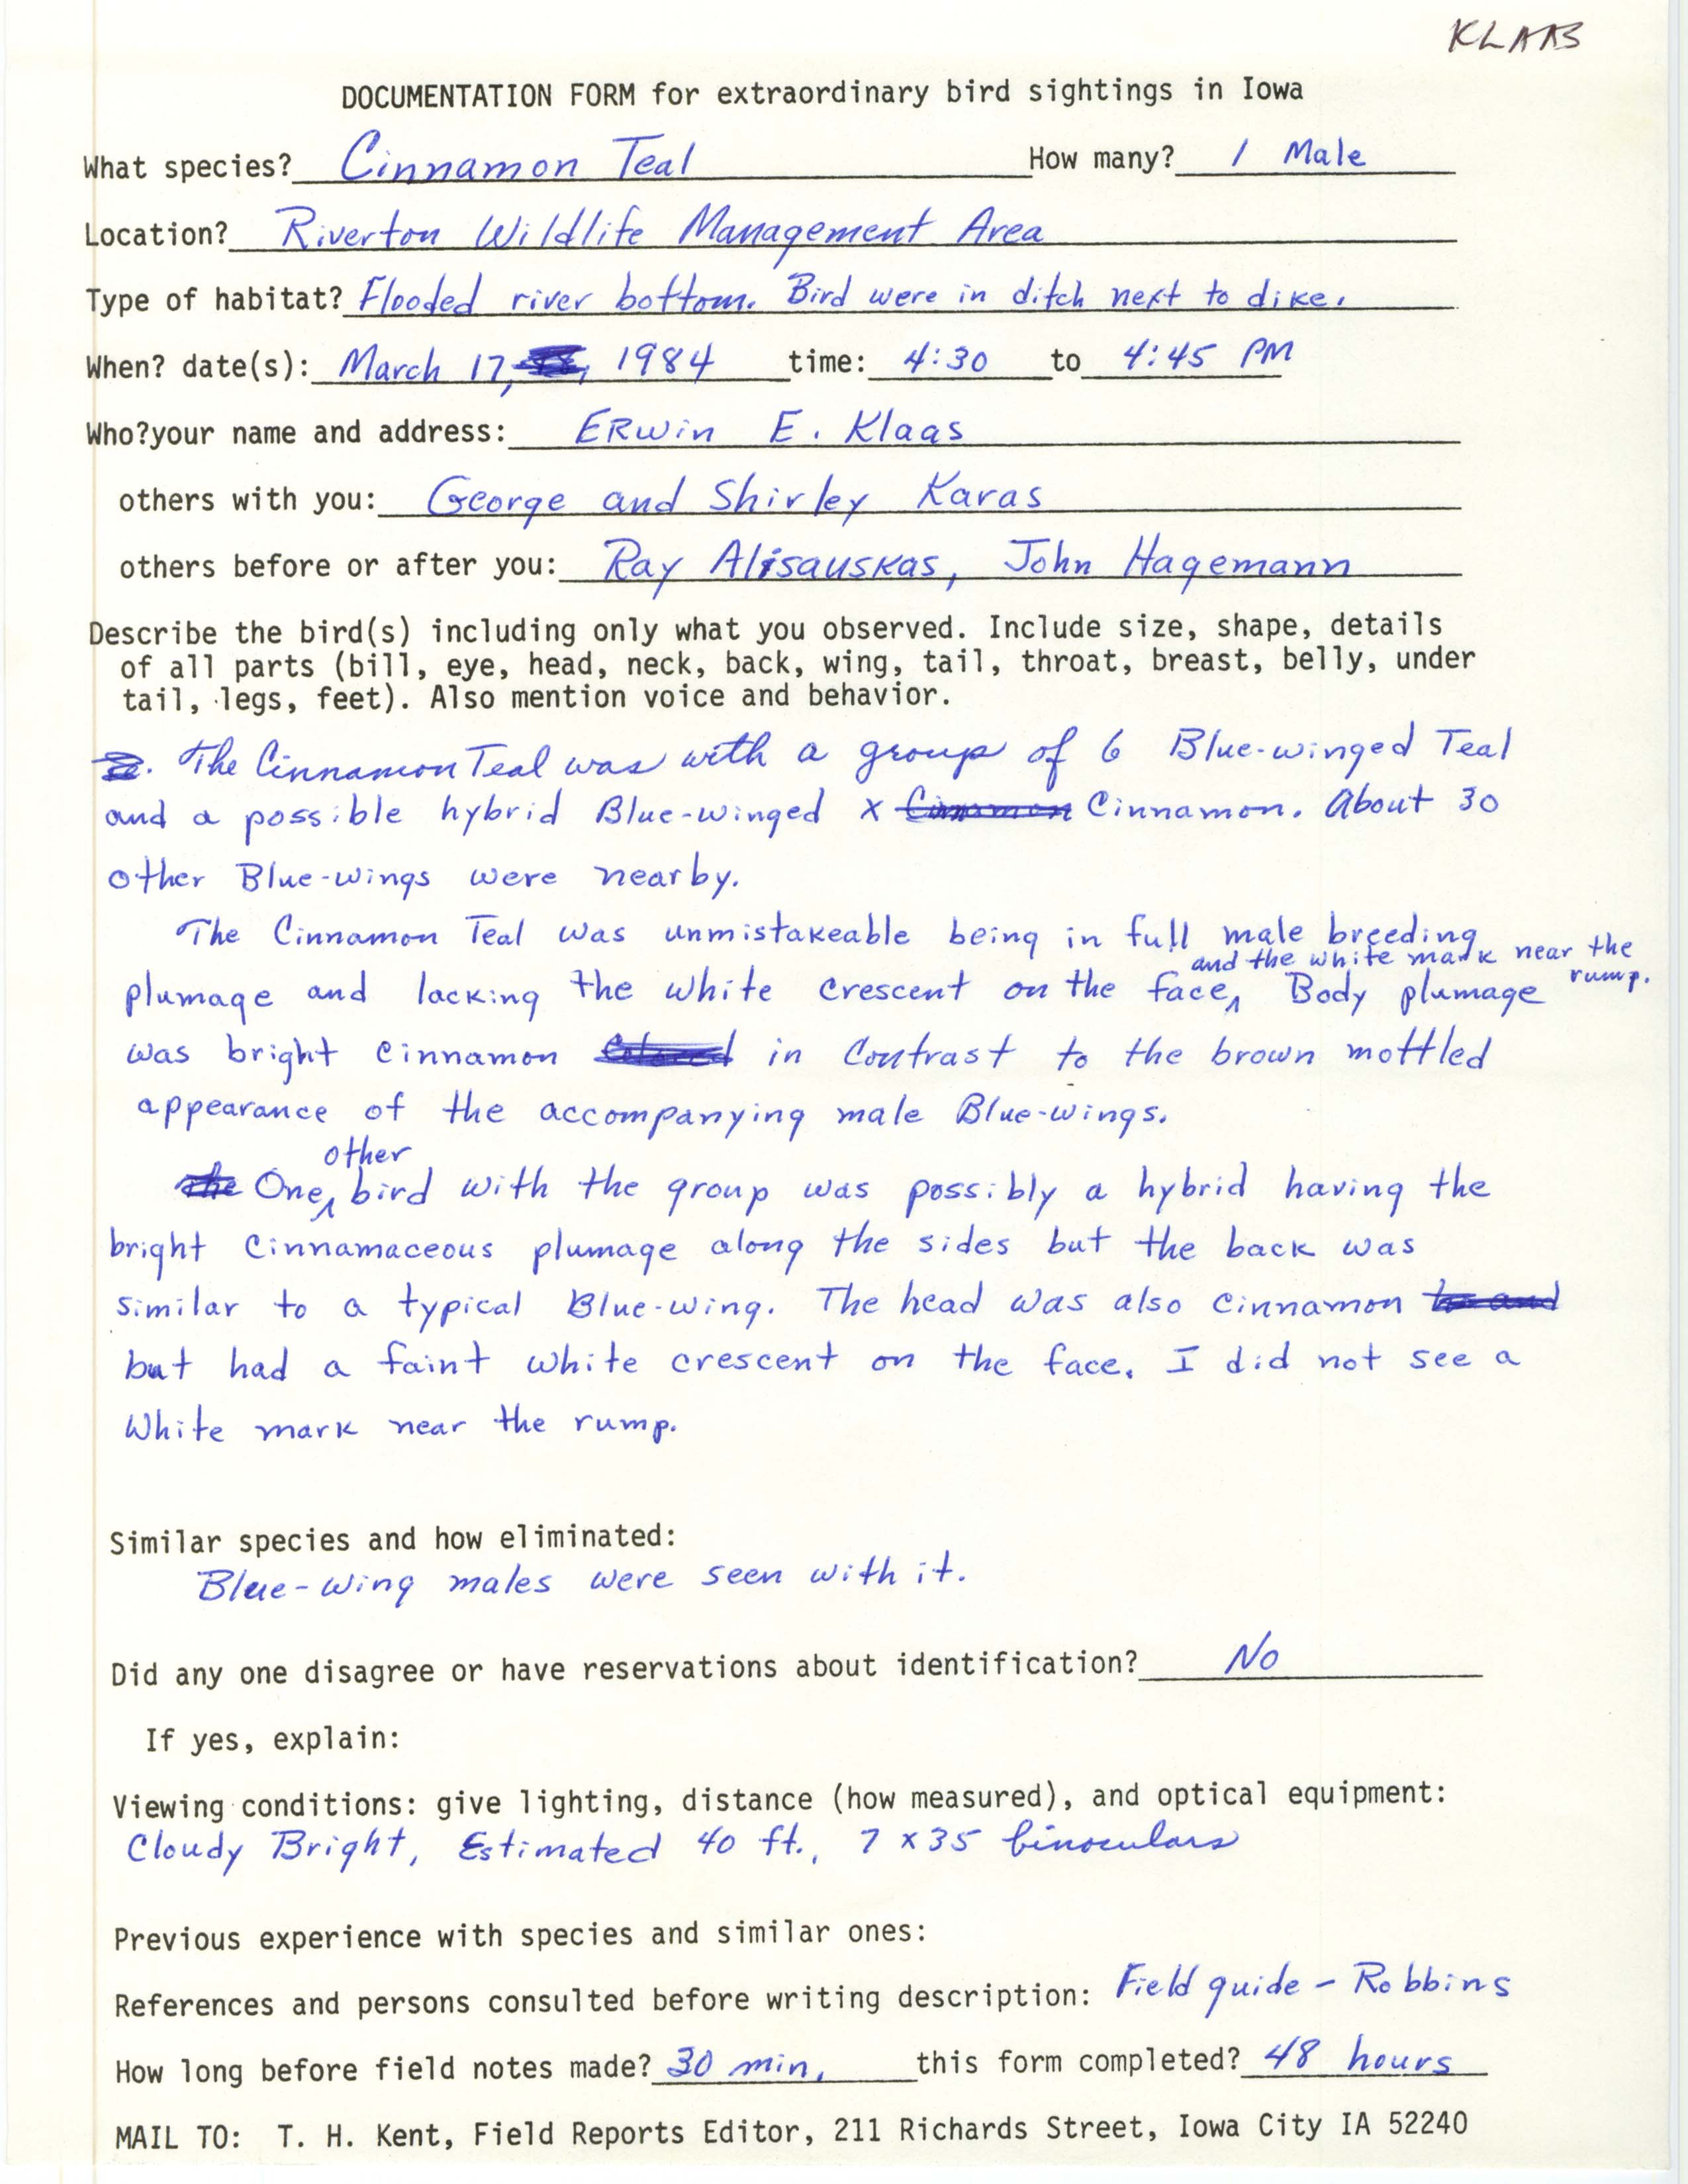 Rare bird documentation form for Cinnamon Teal at Riverton Wildlife Management Area, 1984